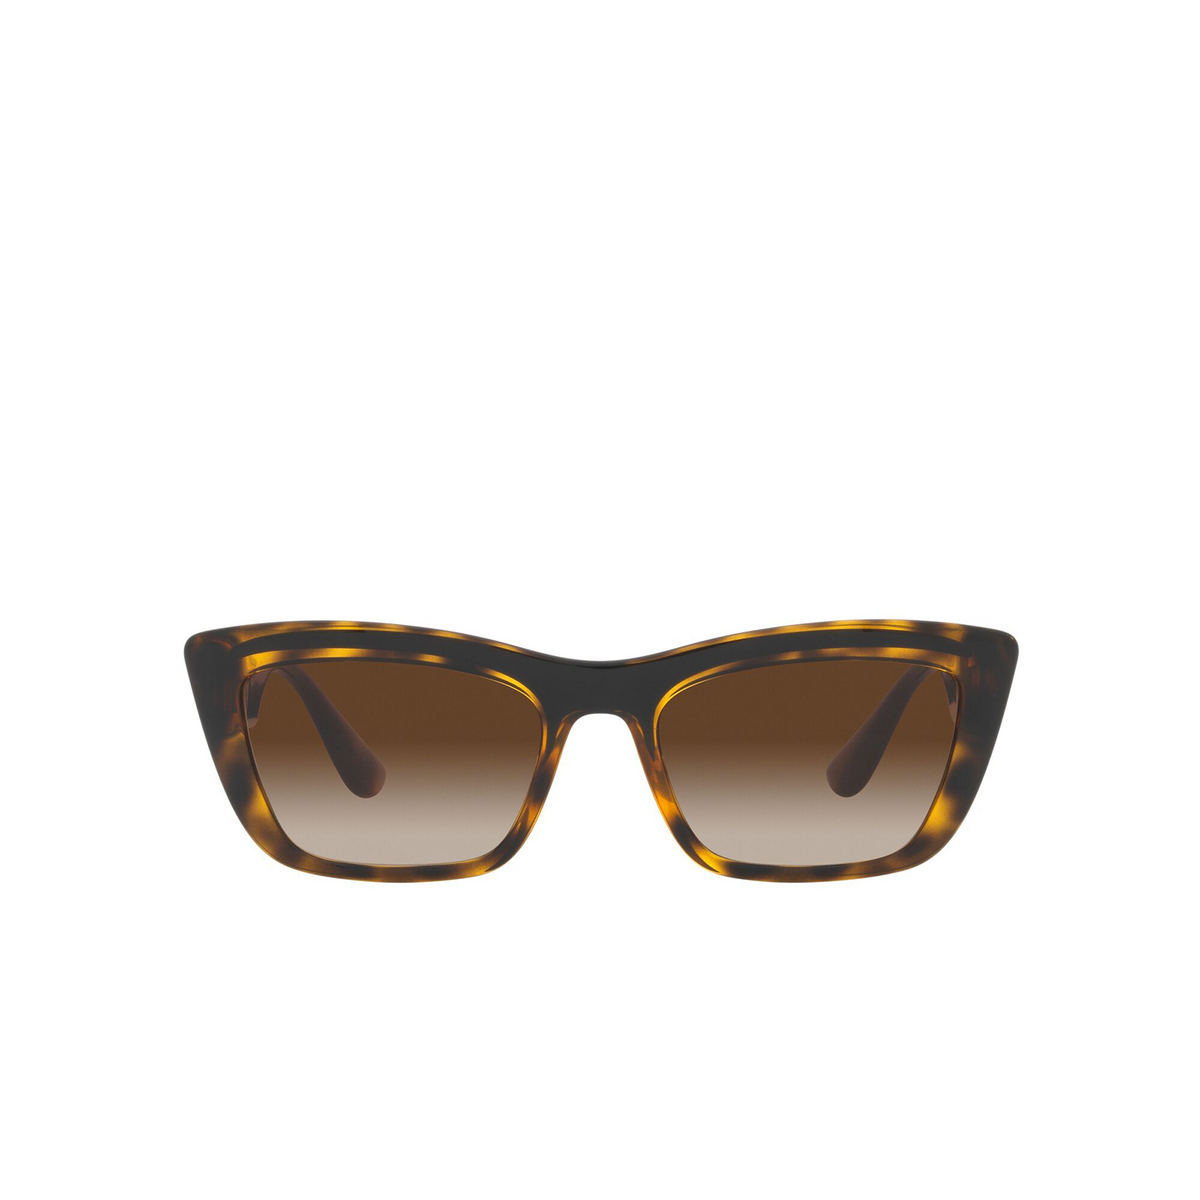 Dolce & Gabbana DG6171 Sunglasses 330613 Havana / Black - front view